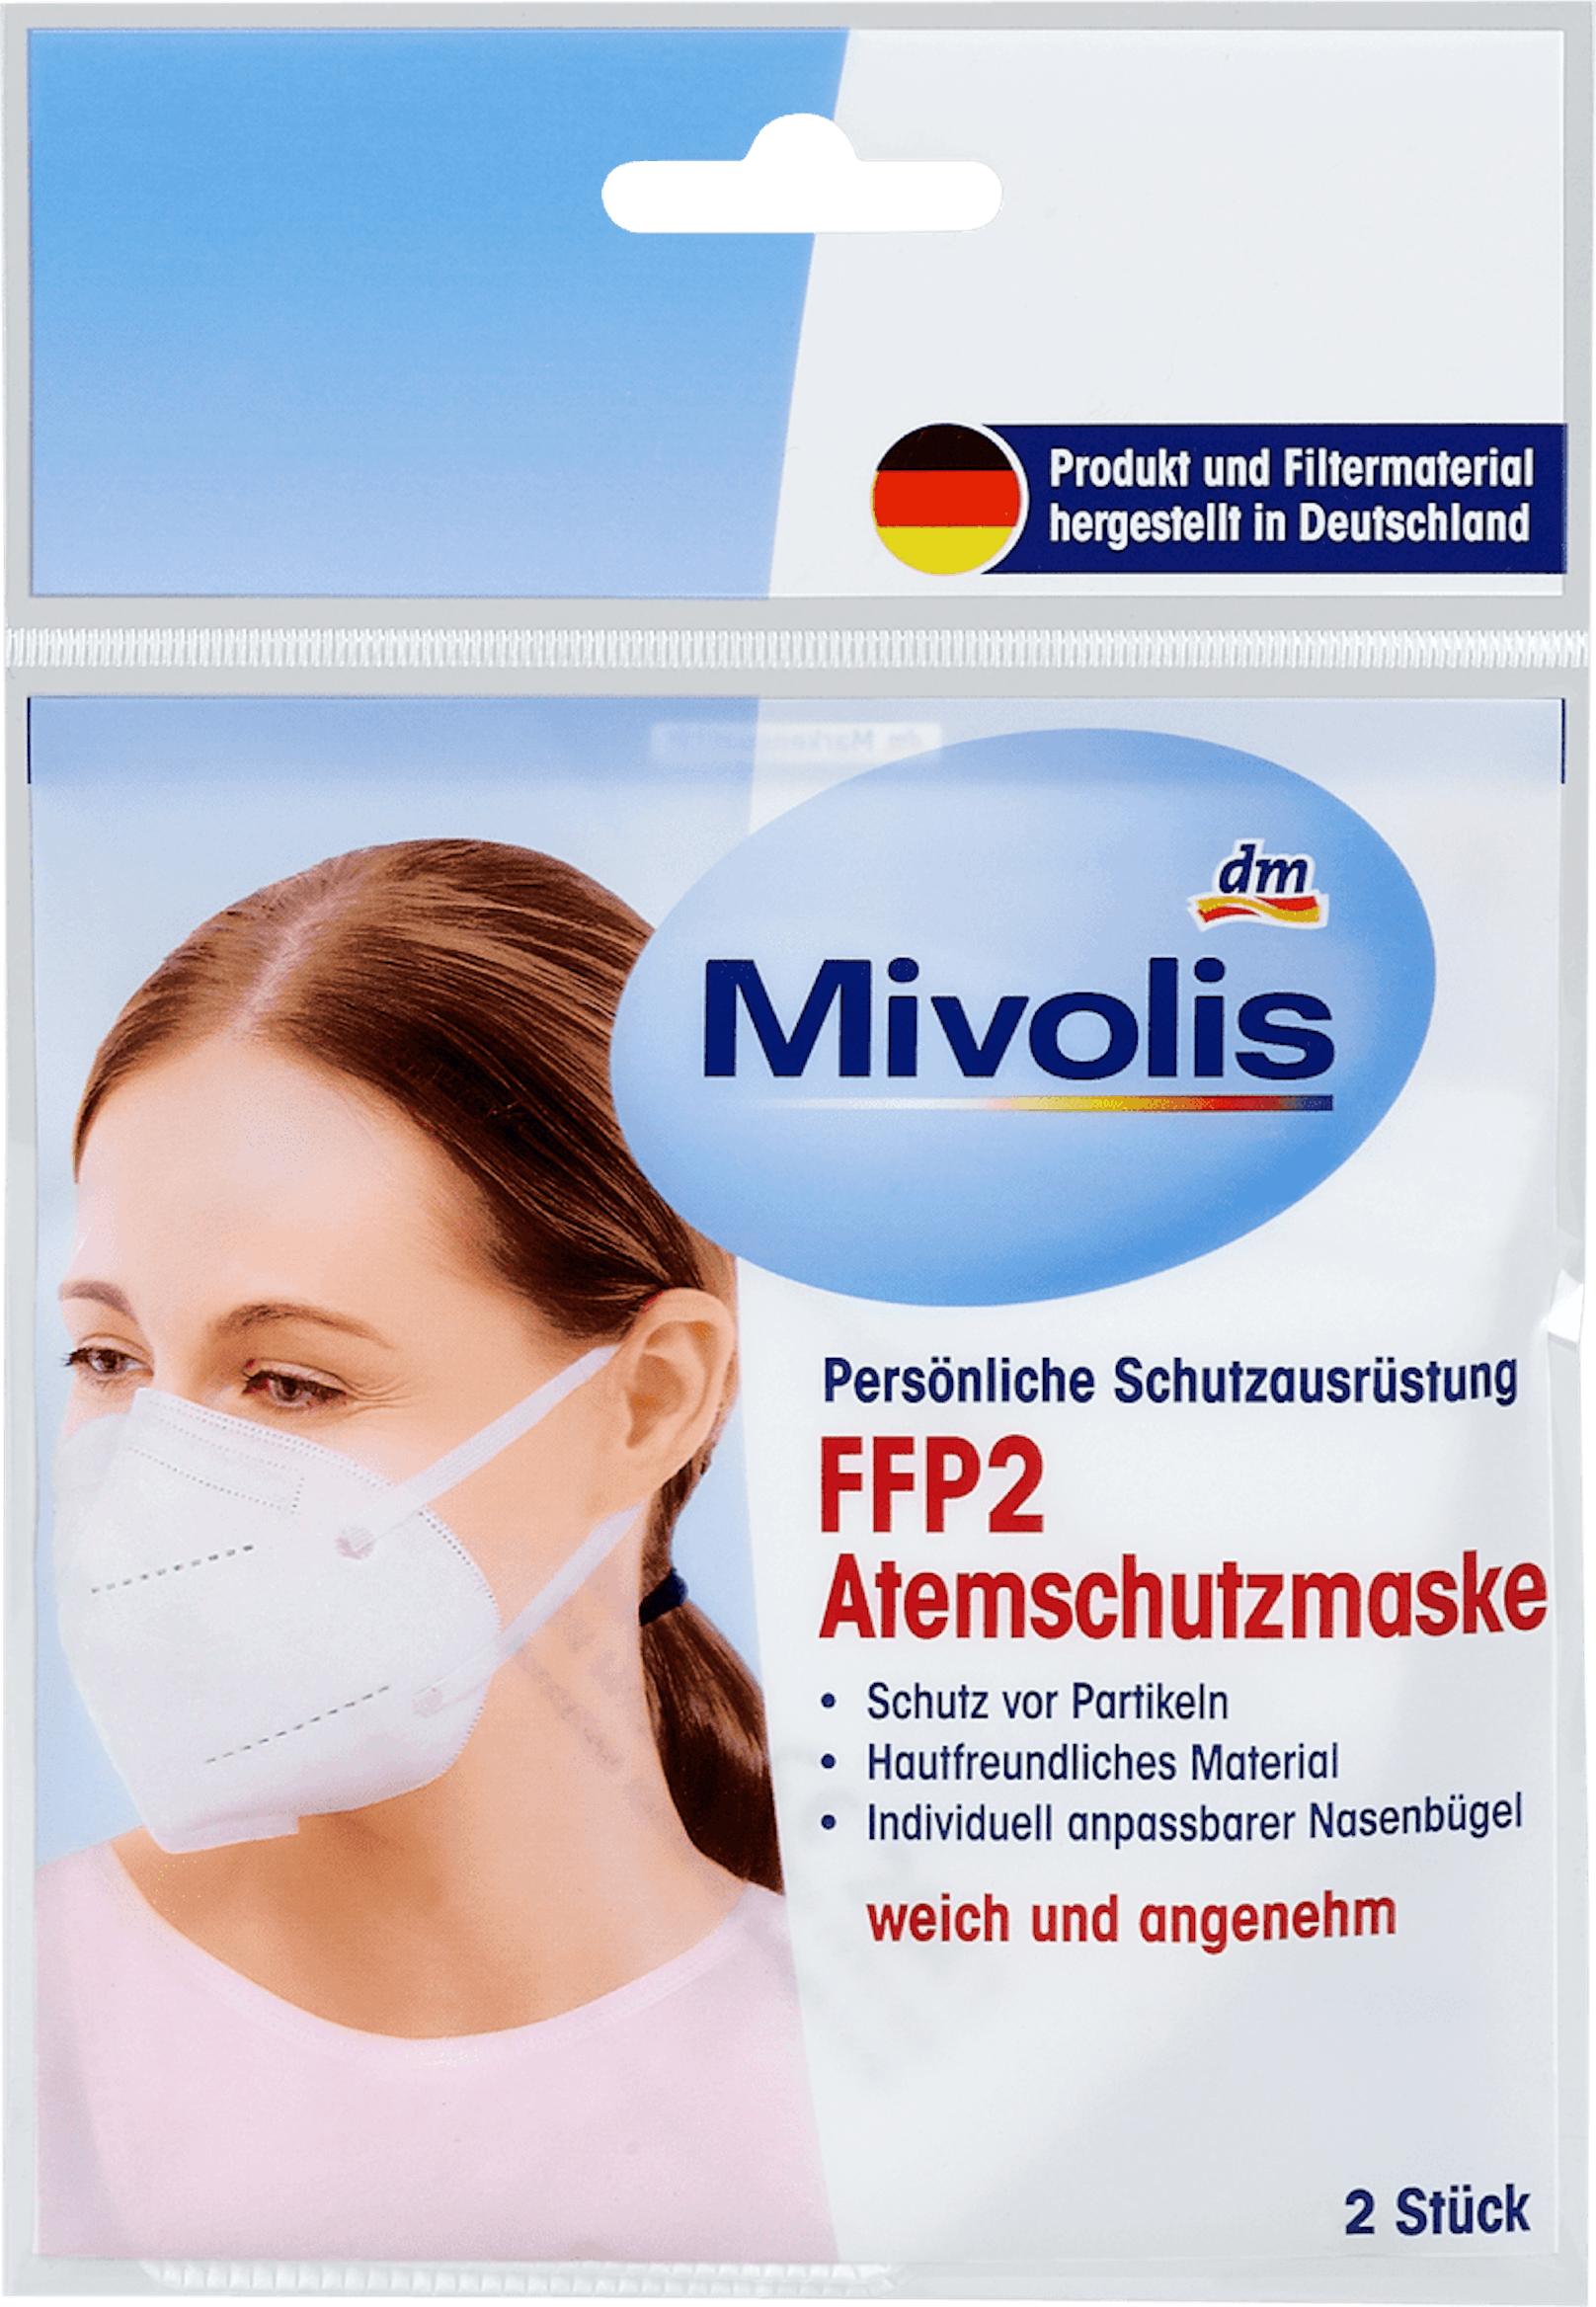 Mivolis FFP2 Atemschutzmaske von dm